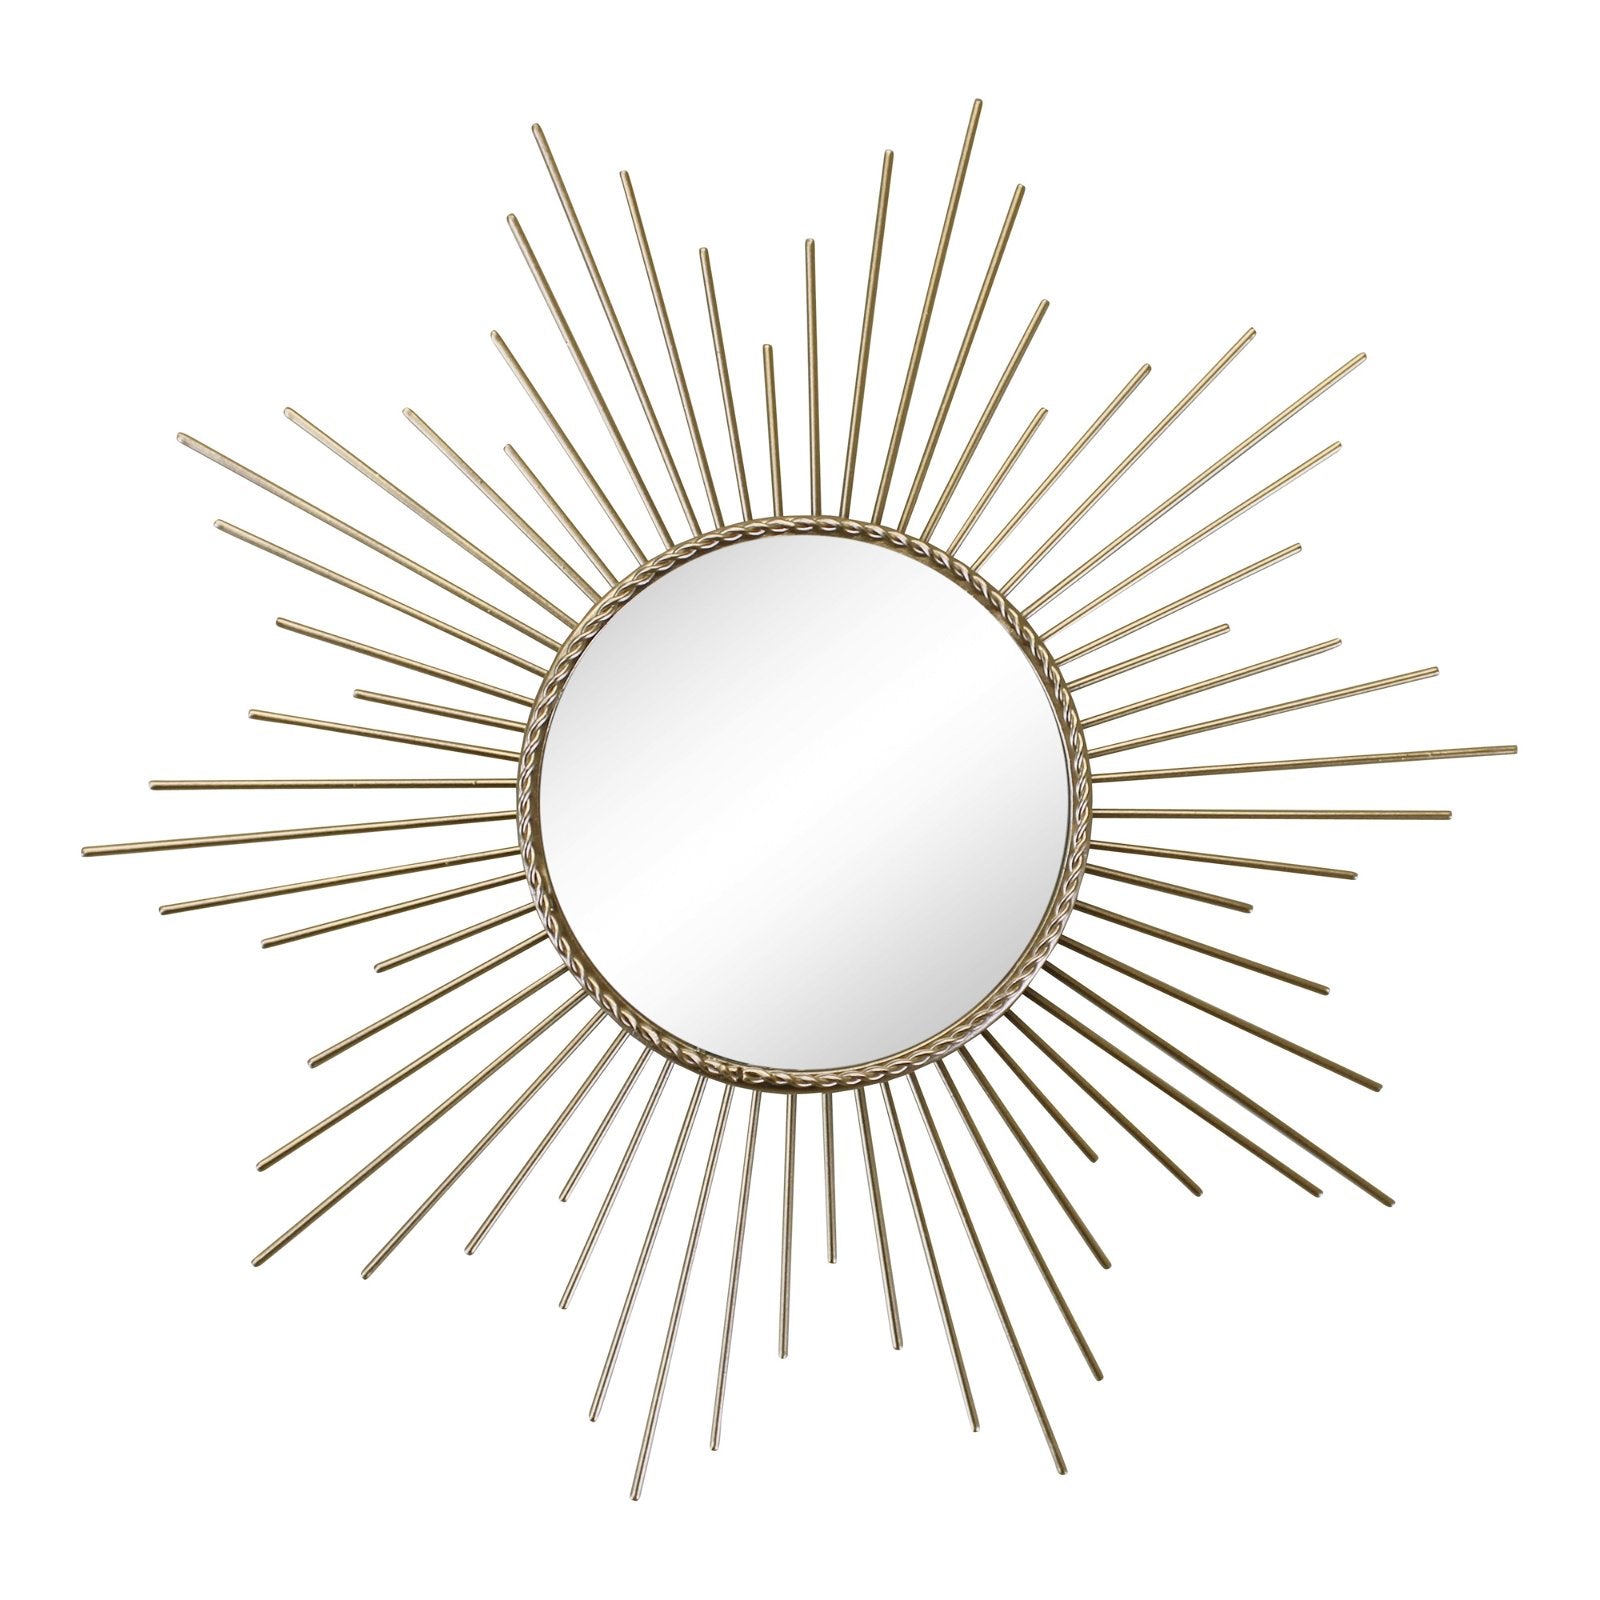 Set of 3 Gold Metal Sunburst Accent Mirrors